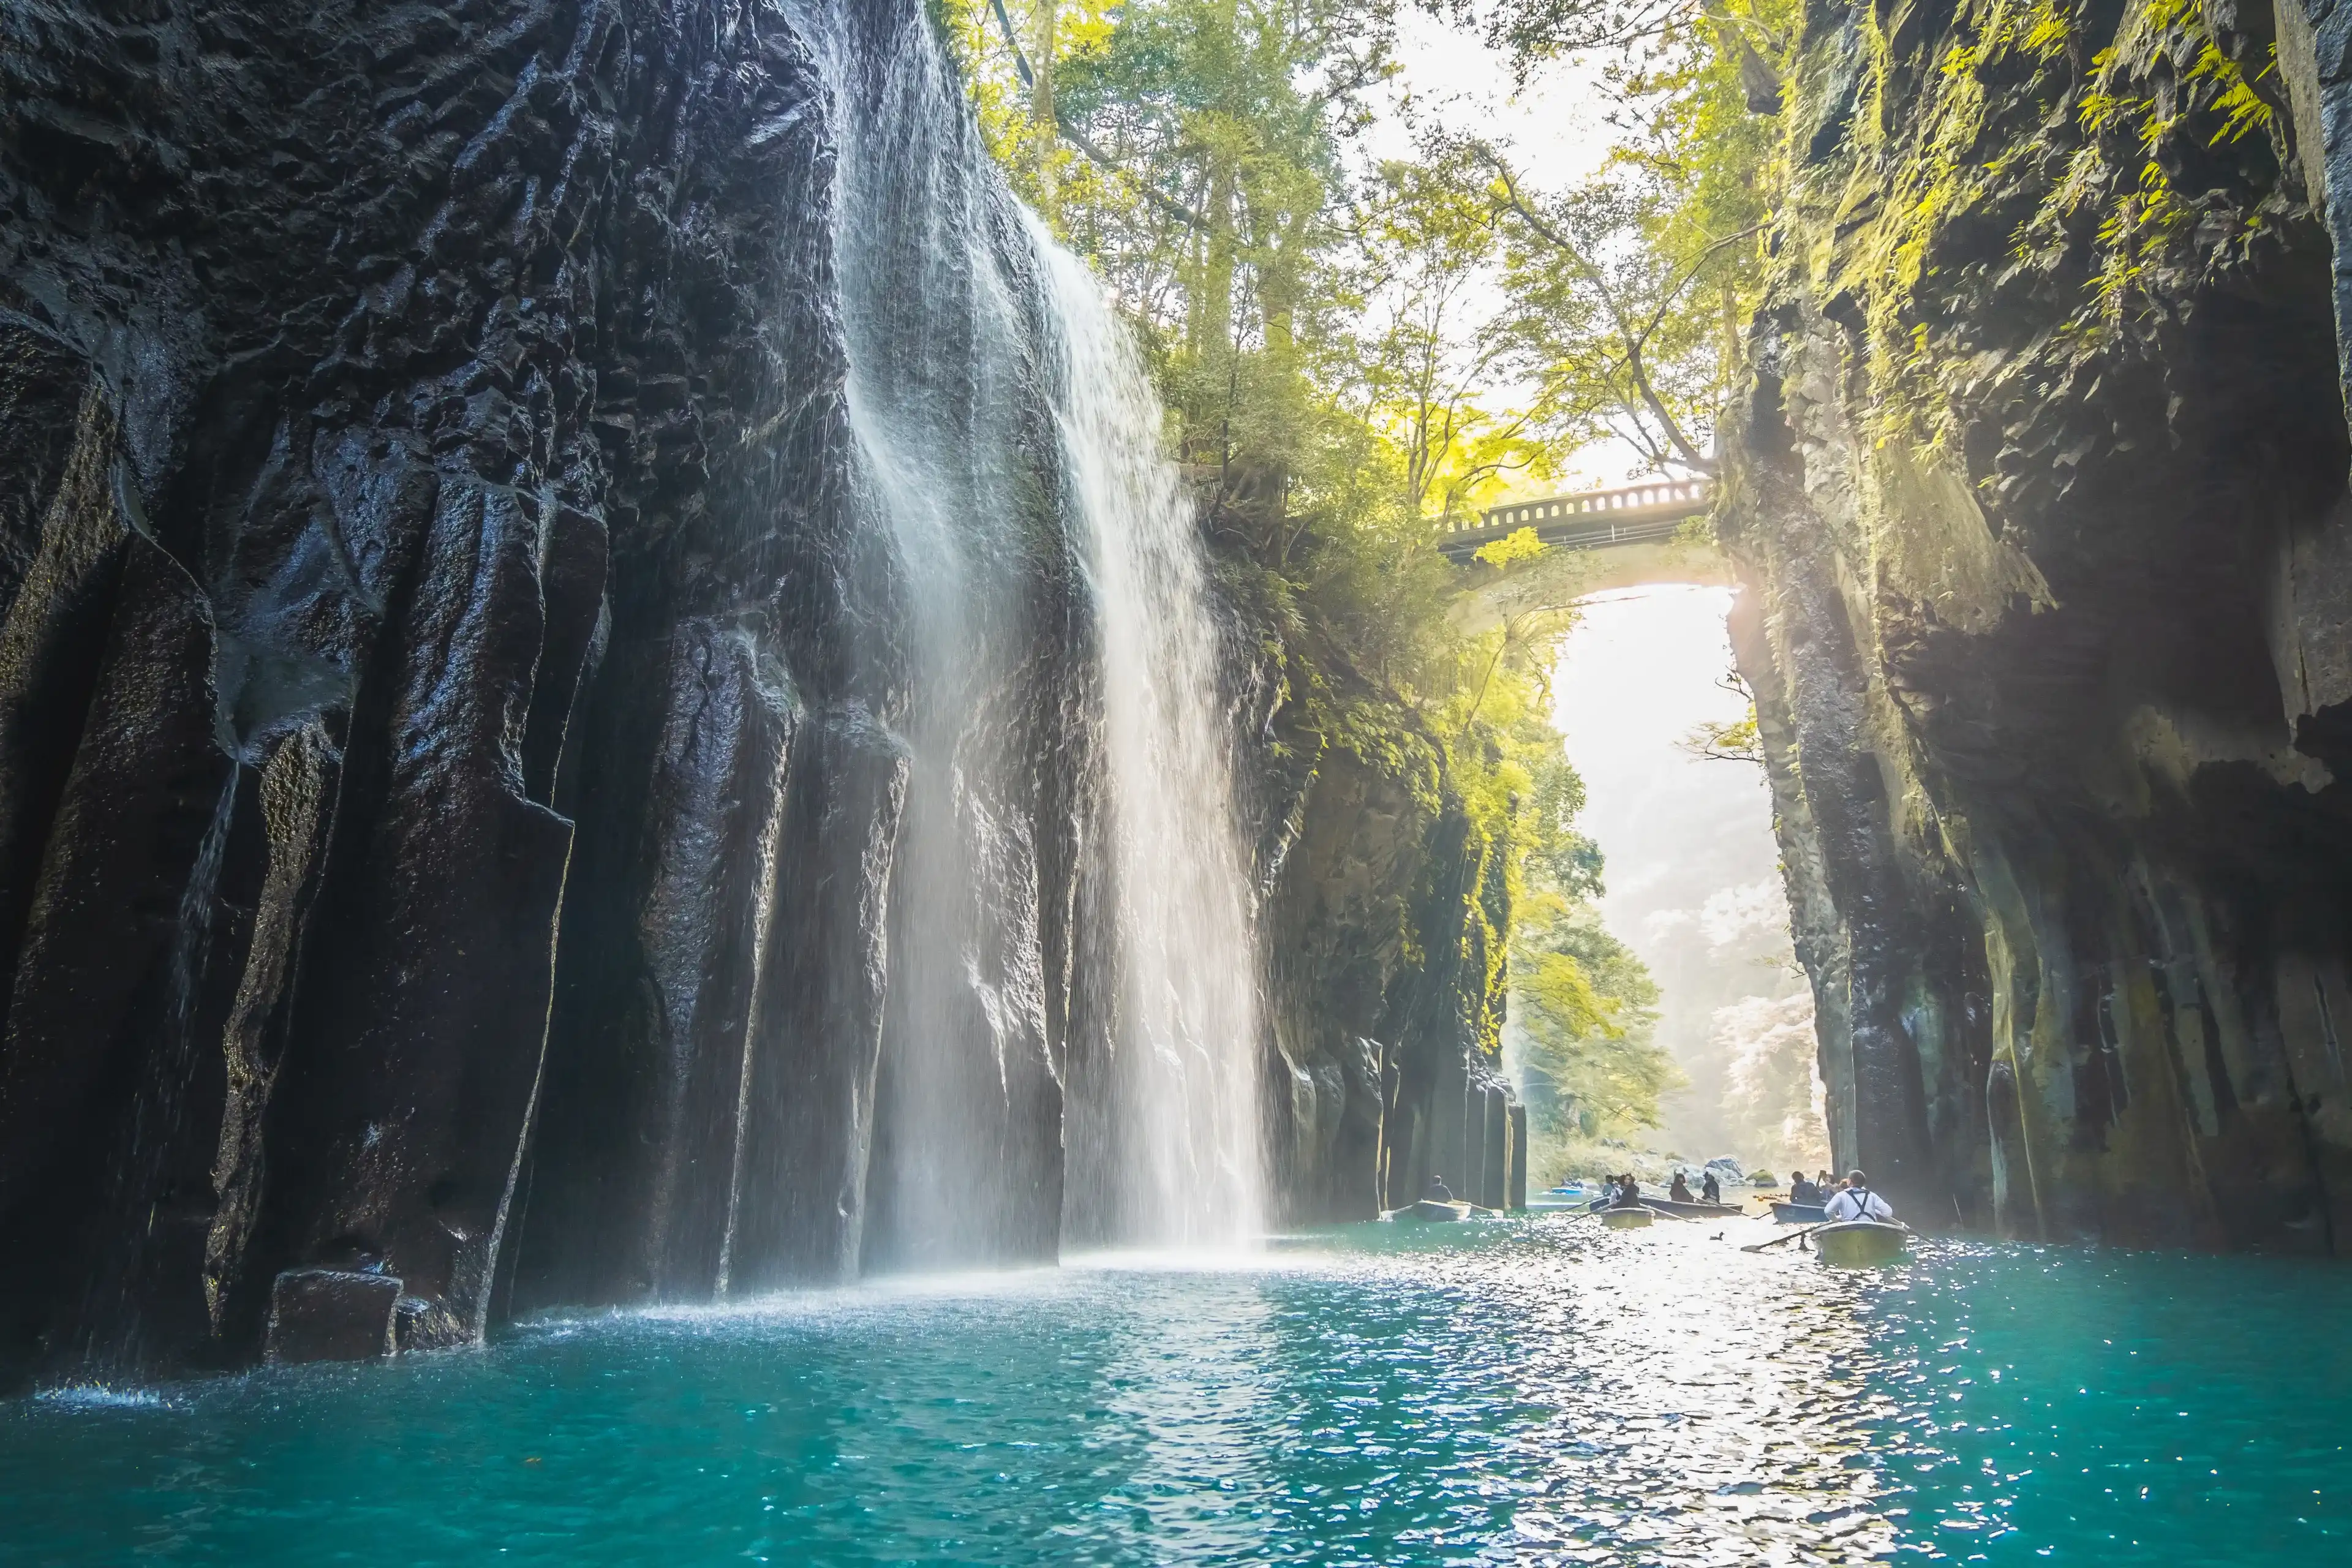 Takachiho Gorge in Takachiho,Waterfall and boat at Miyazaki, Kyushu, Japan